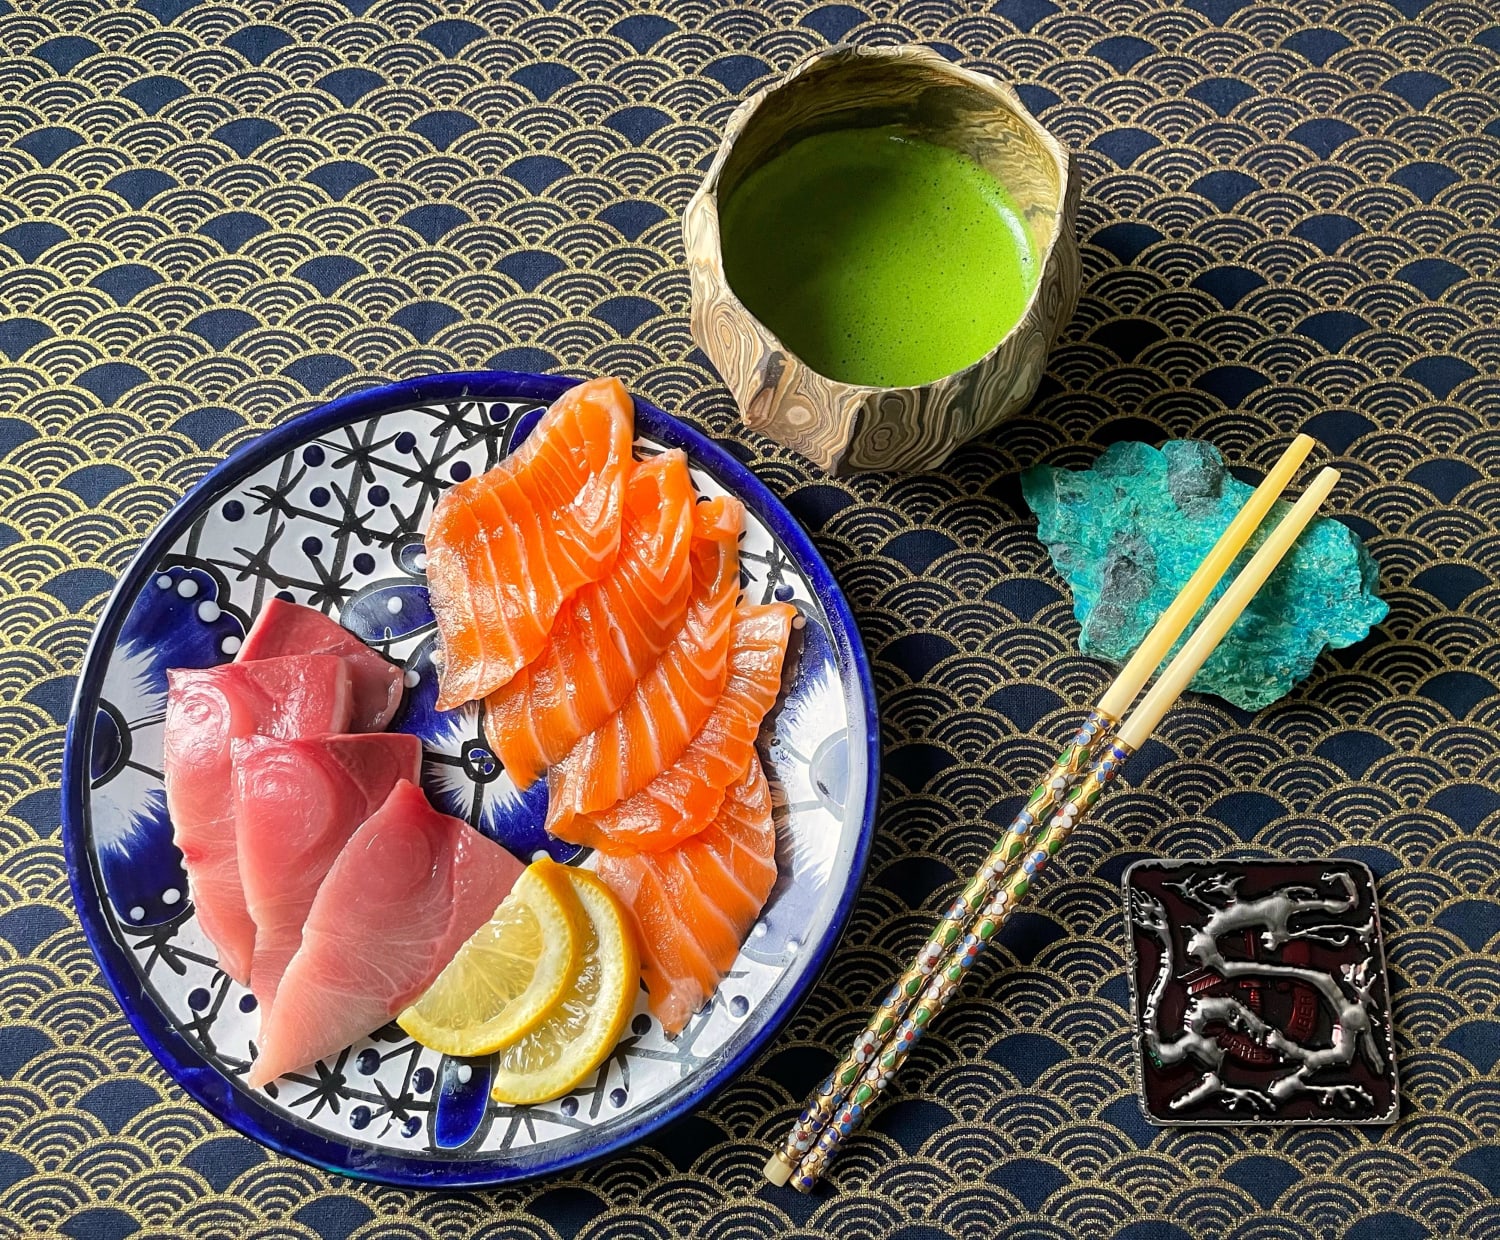 Yellowtail and salmon sashimi with matcha